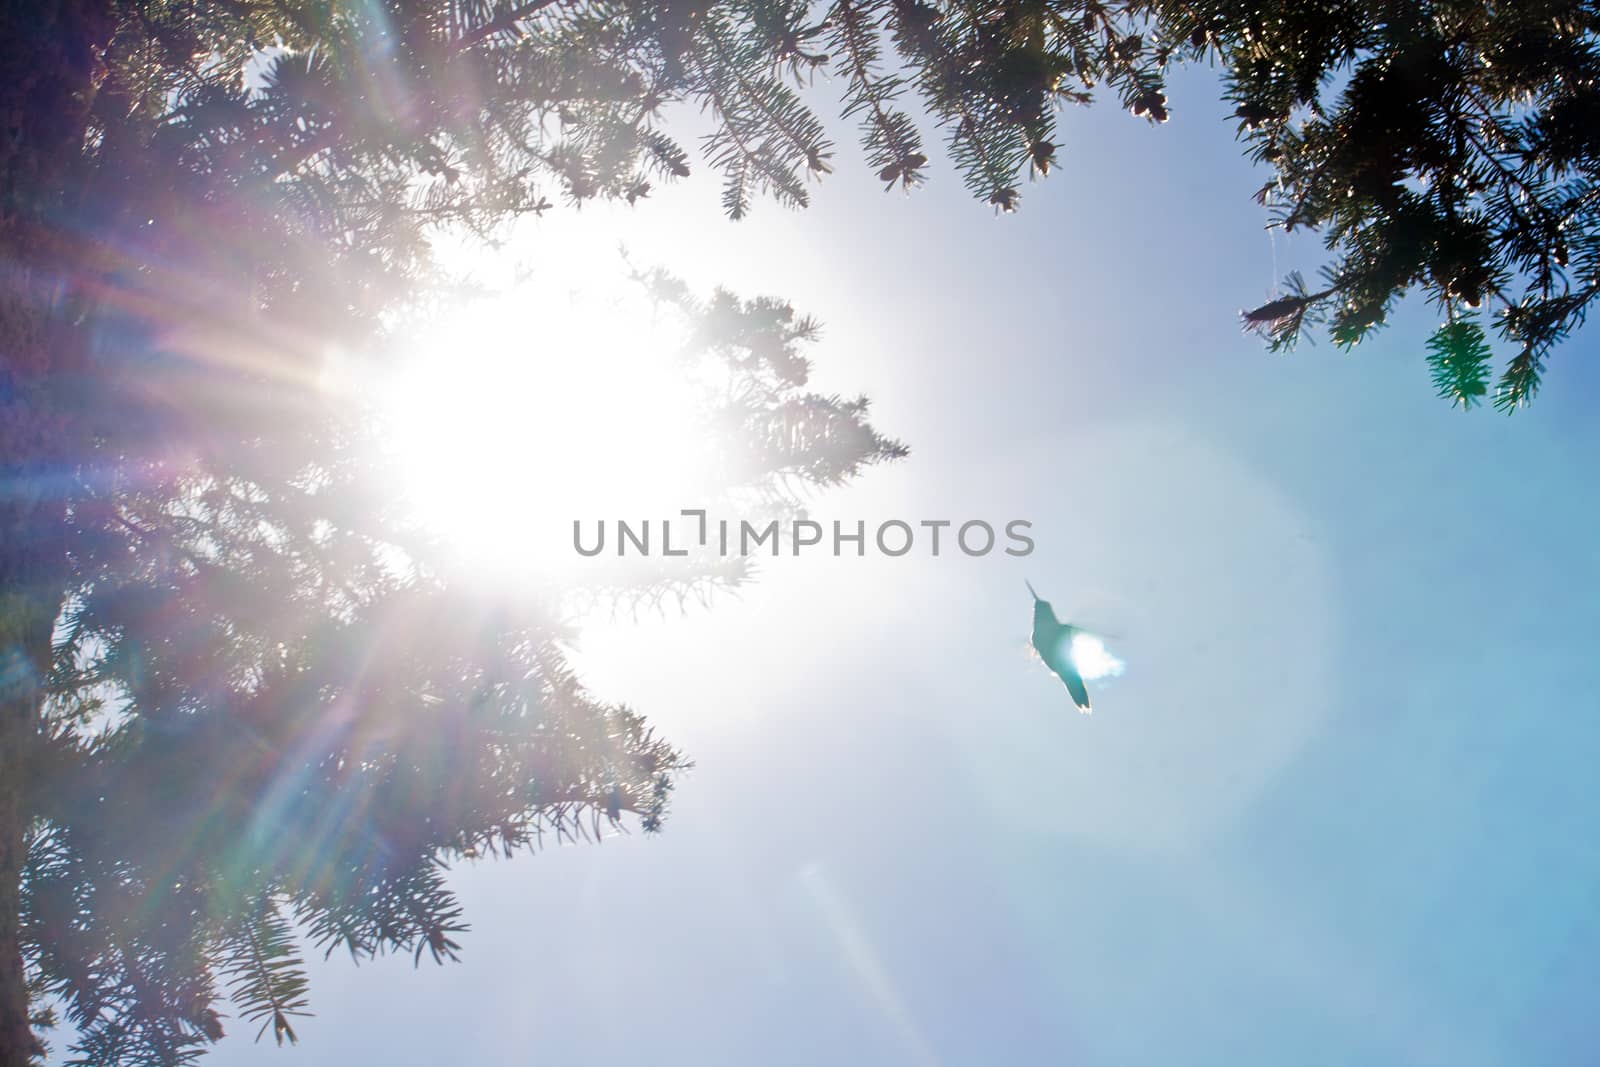 A backlit hummingbird flies into a camera flare creating a hopeful image.